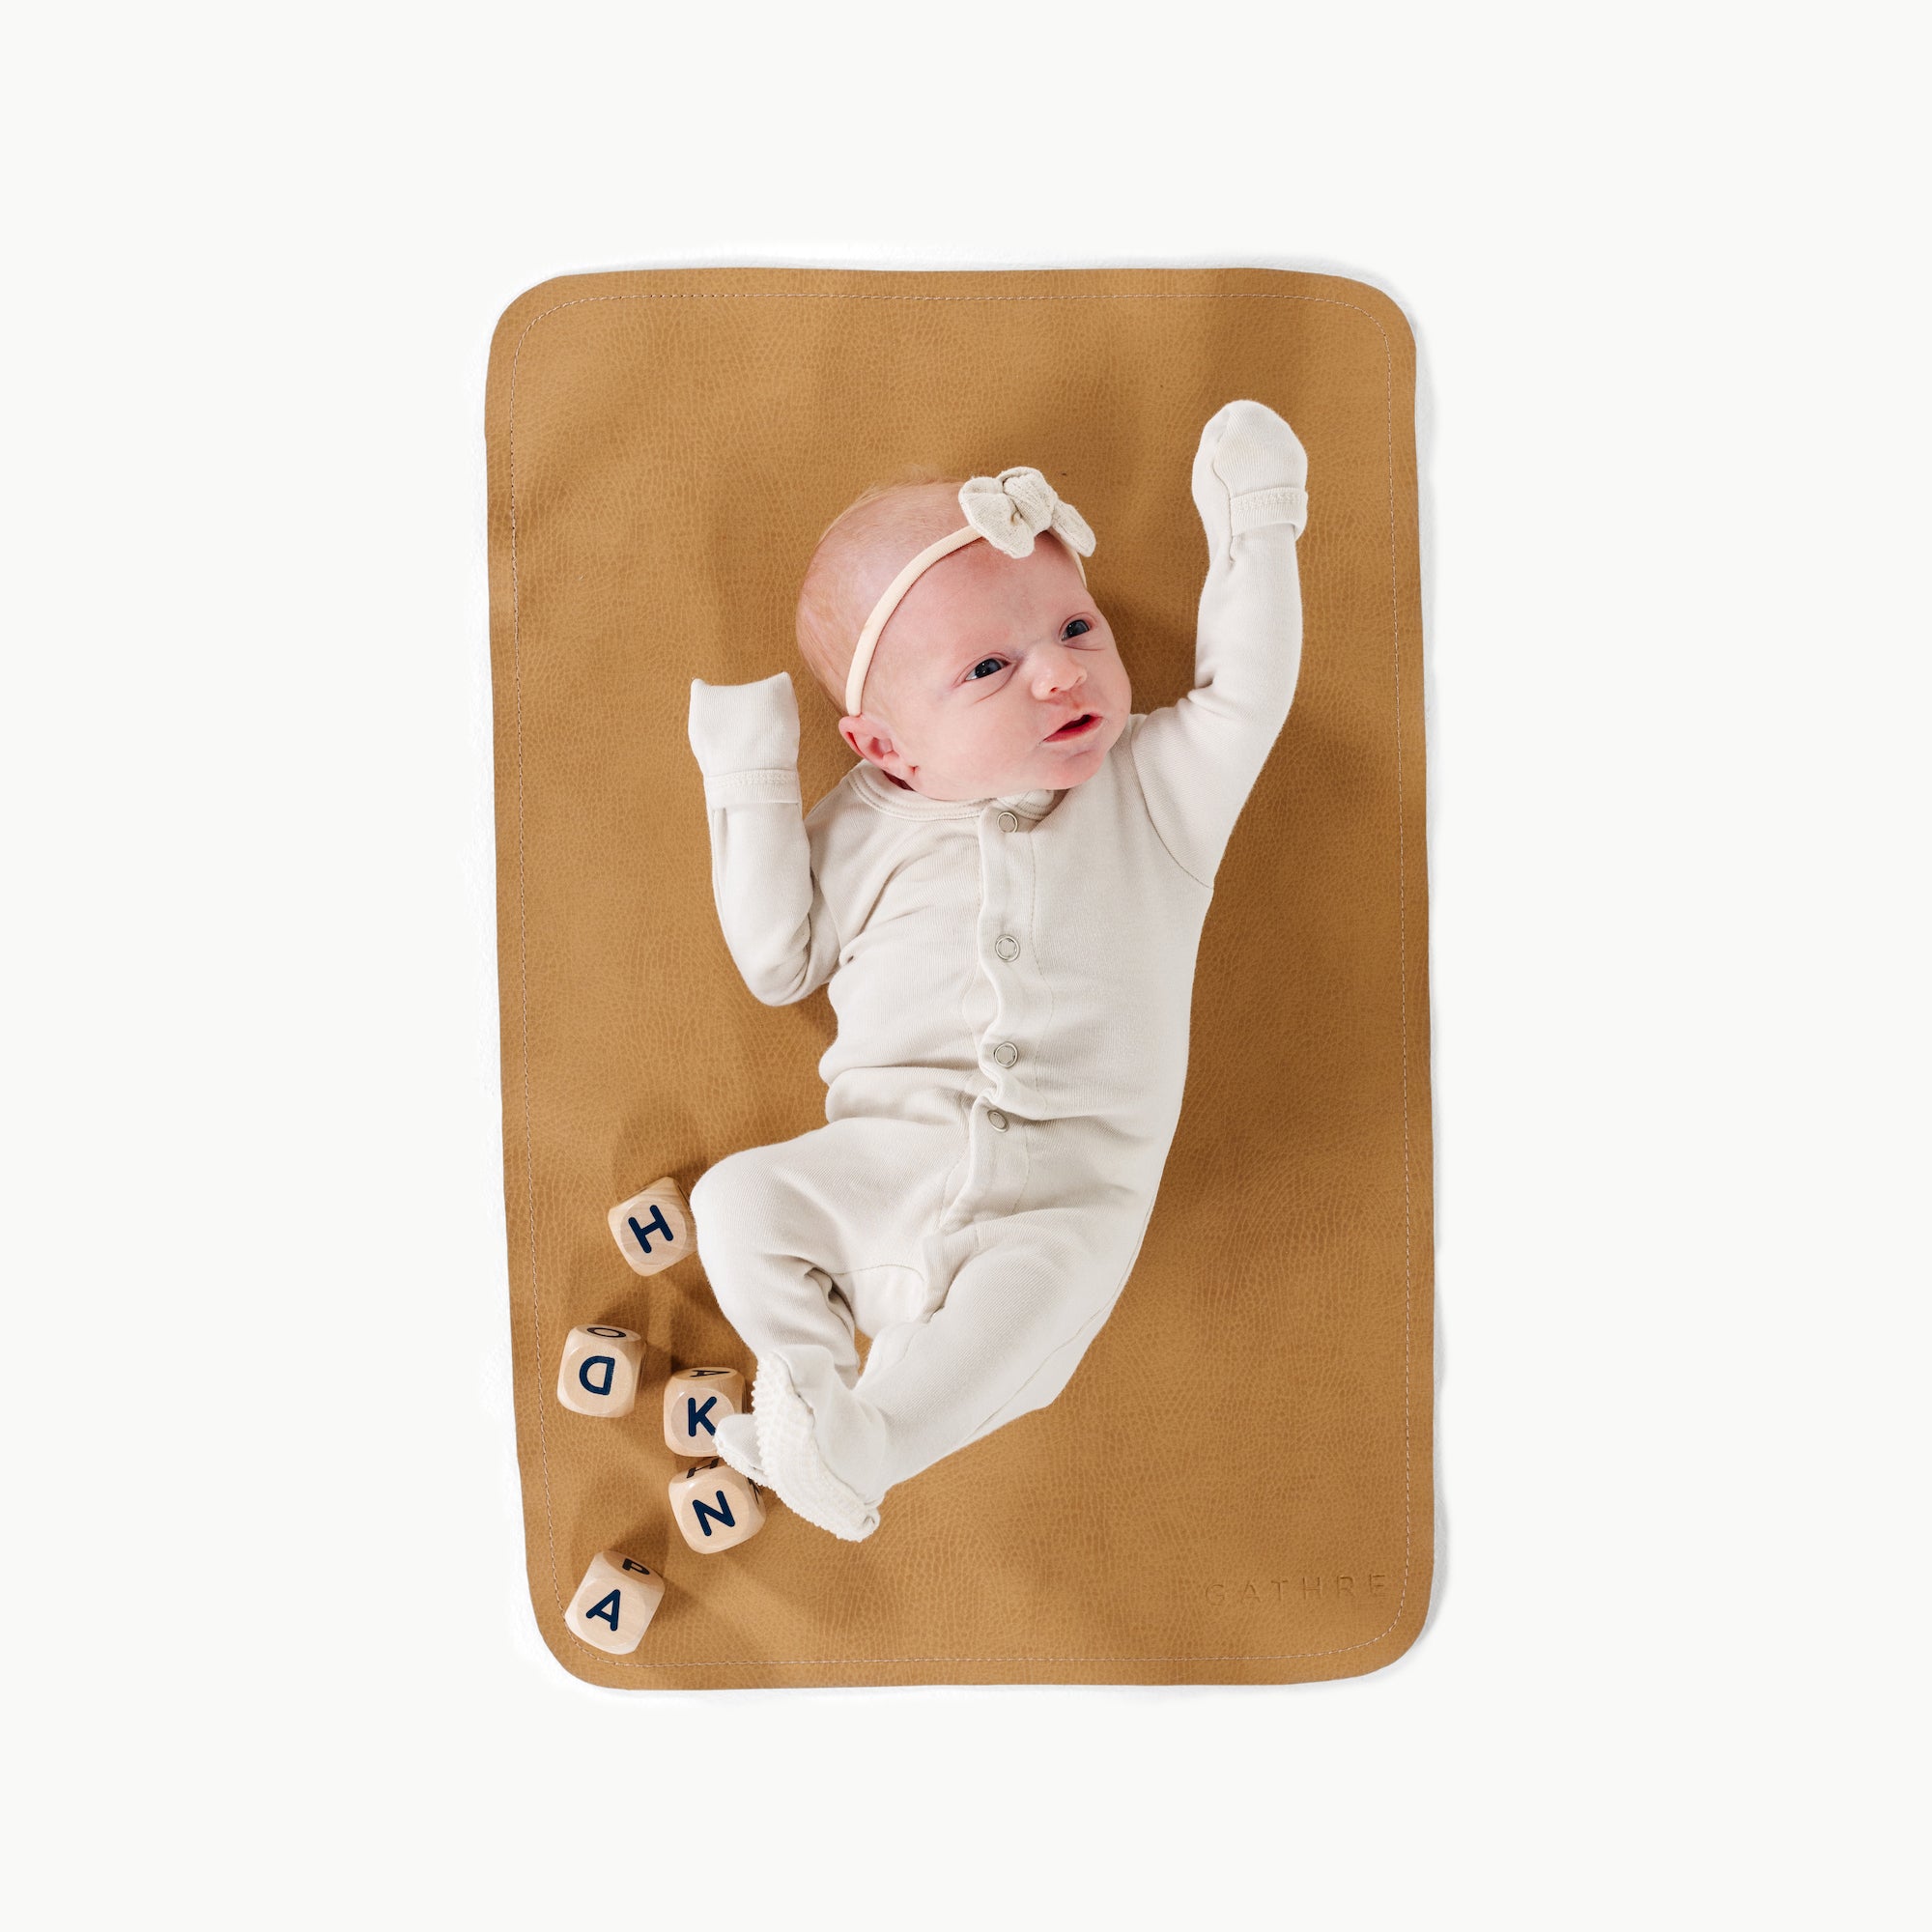 Tassel@overhead of baby laying on the tassel micro mat